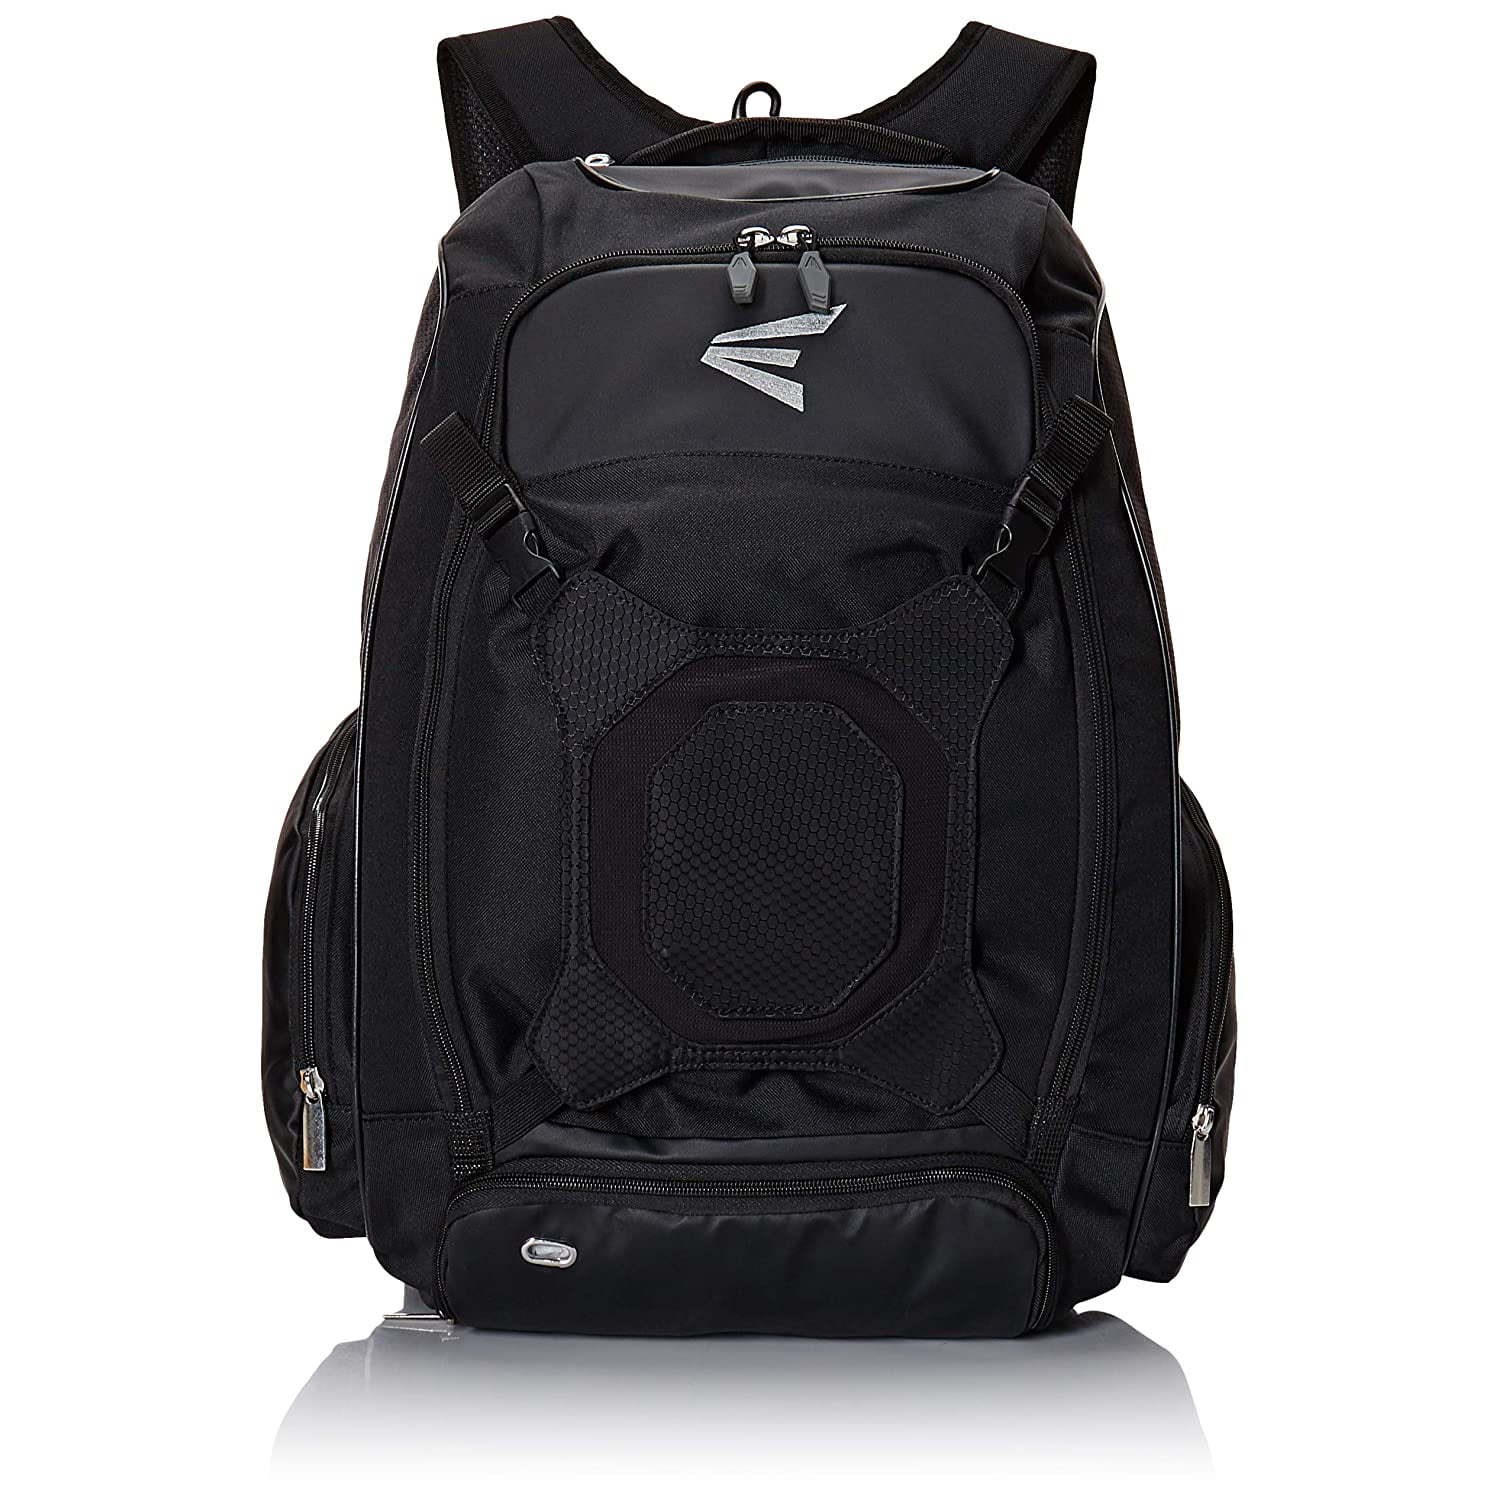 Buy EASTON WALK-OFF IV Bat & Equipment Backpack Bag | Baseball Soft...